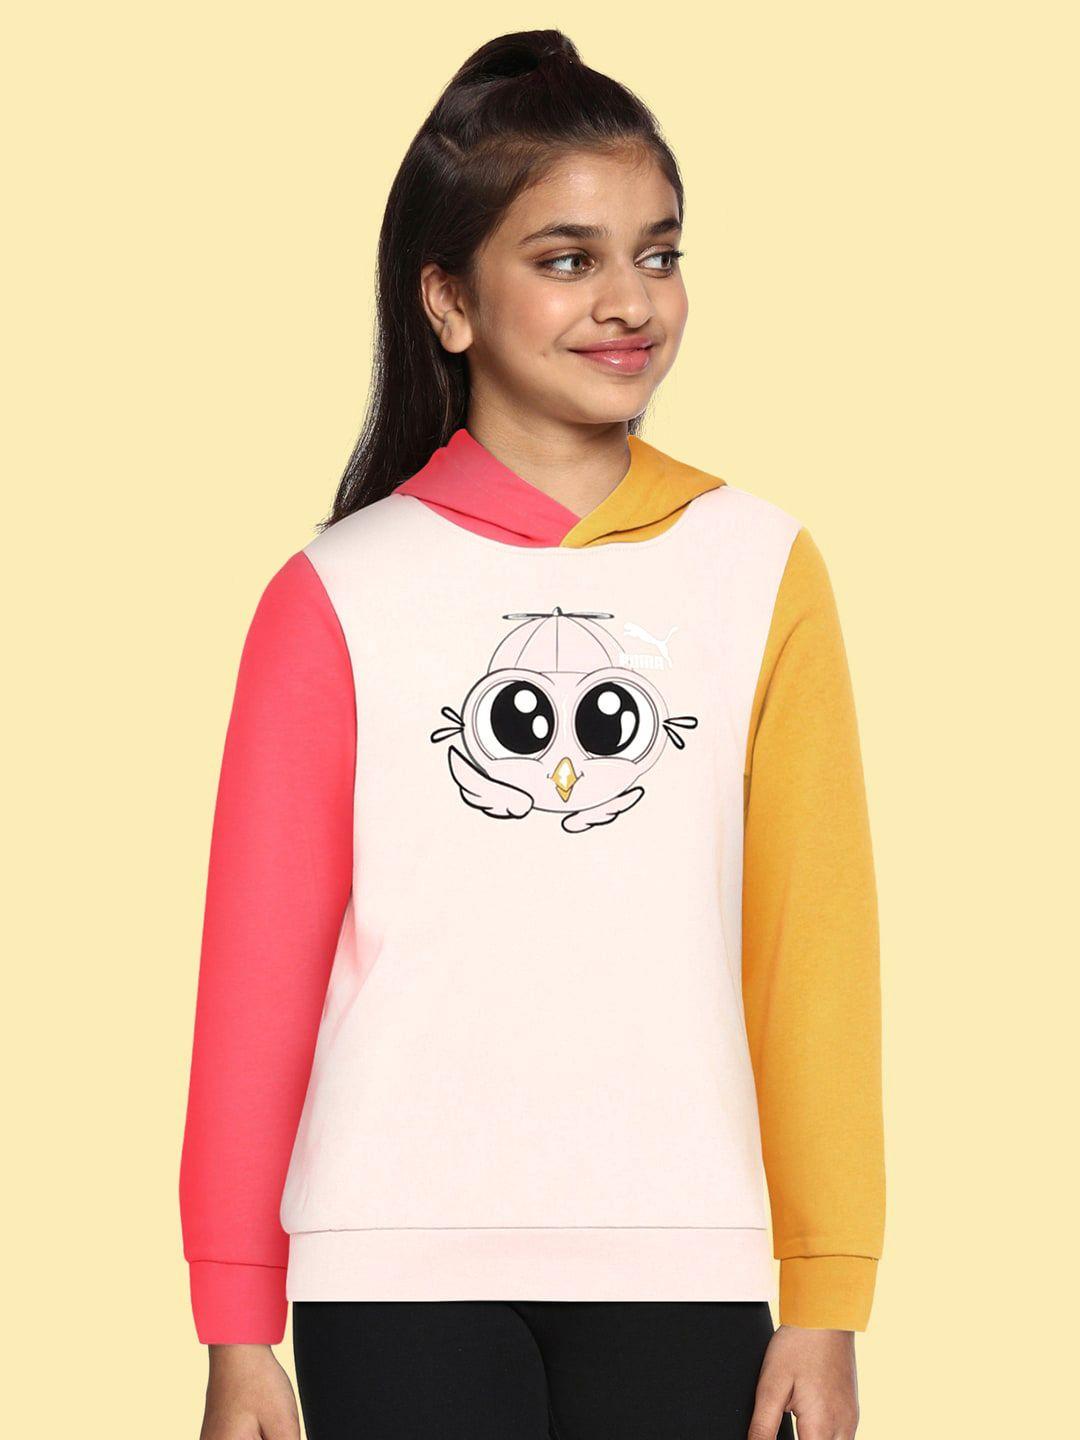 puma kids pink & mustard yellow graphic print lil hoodie sweatshirt